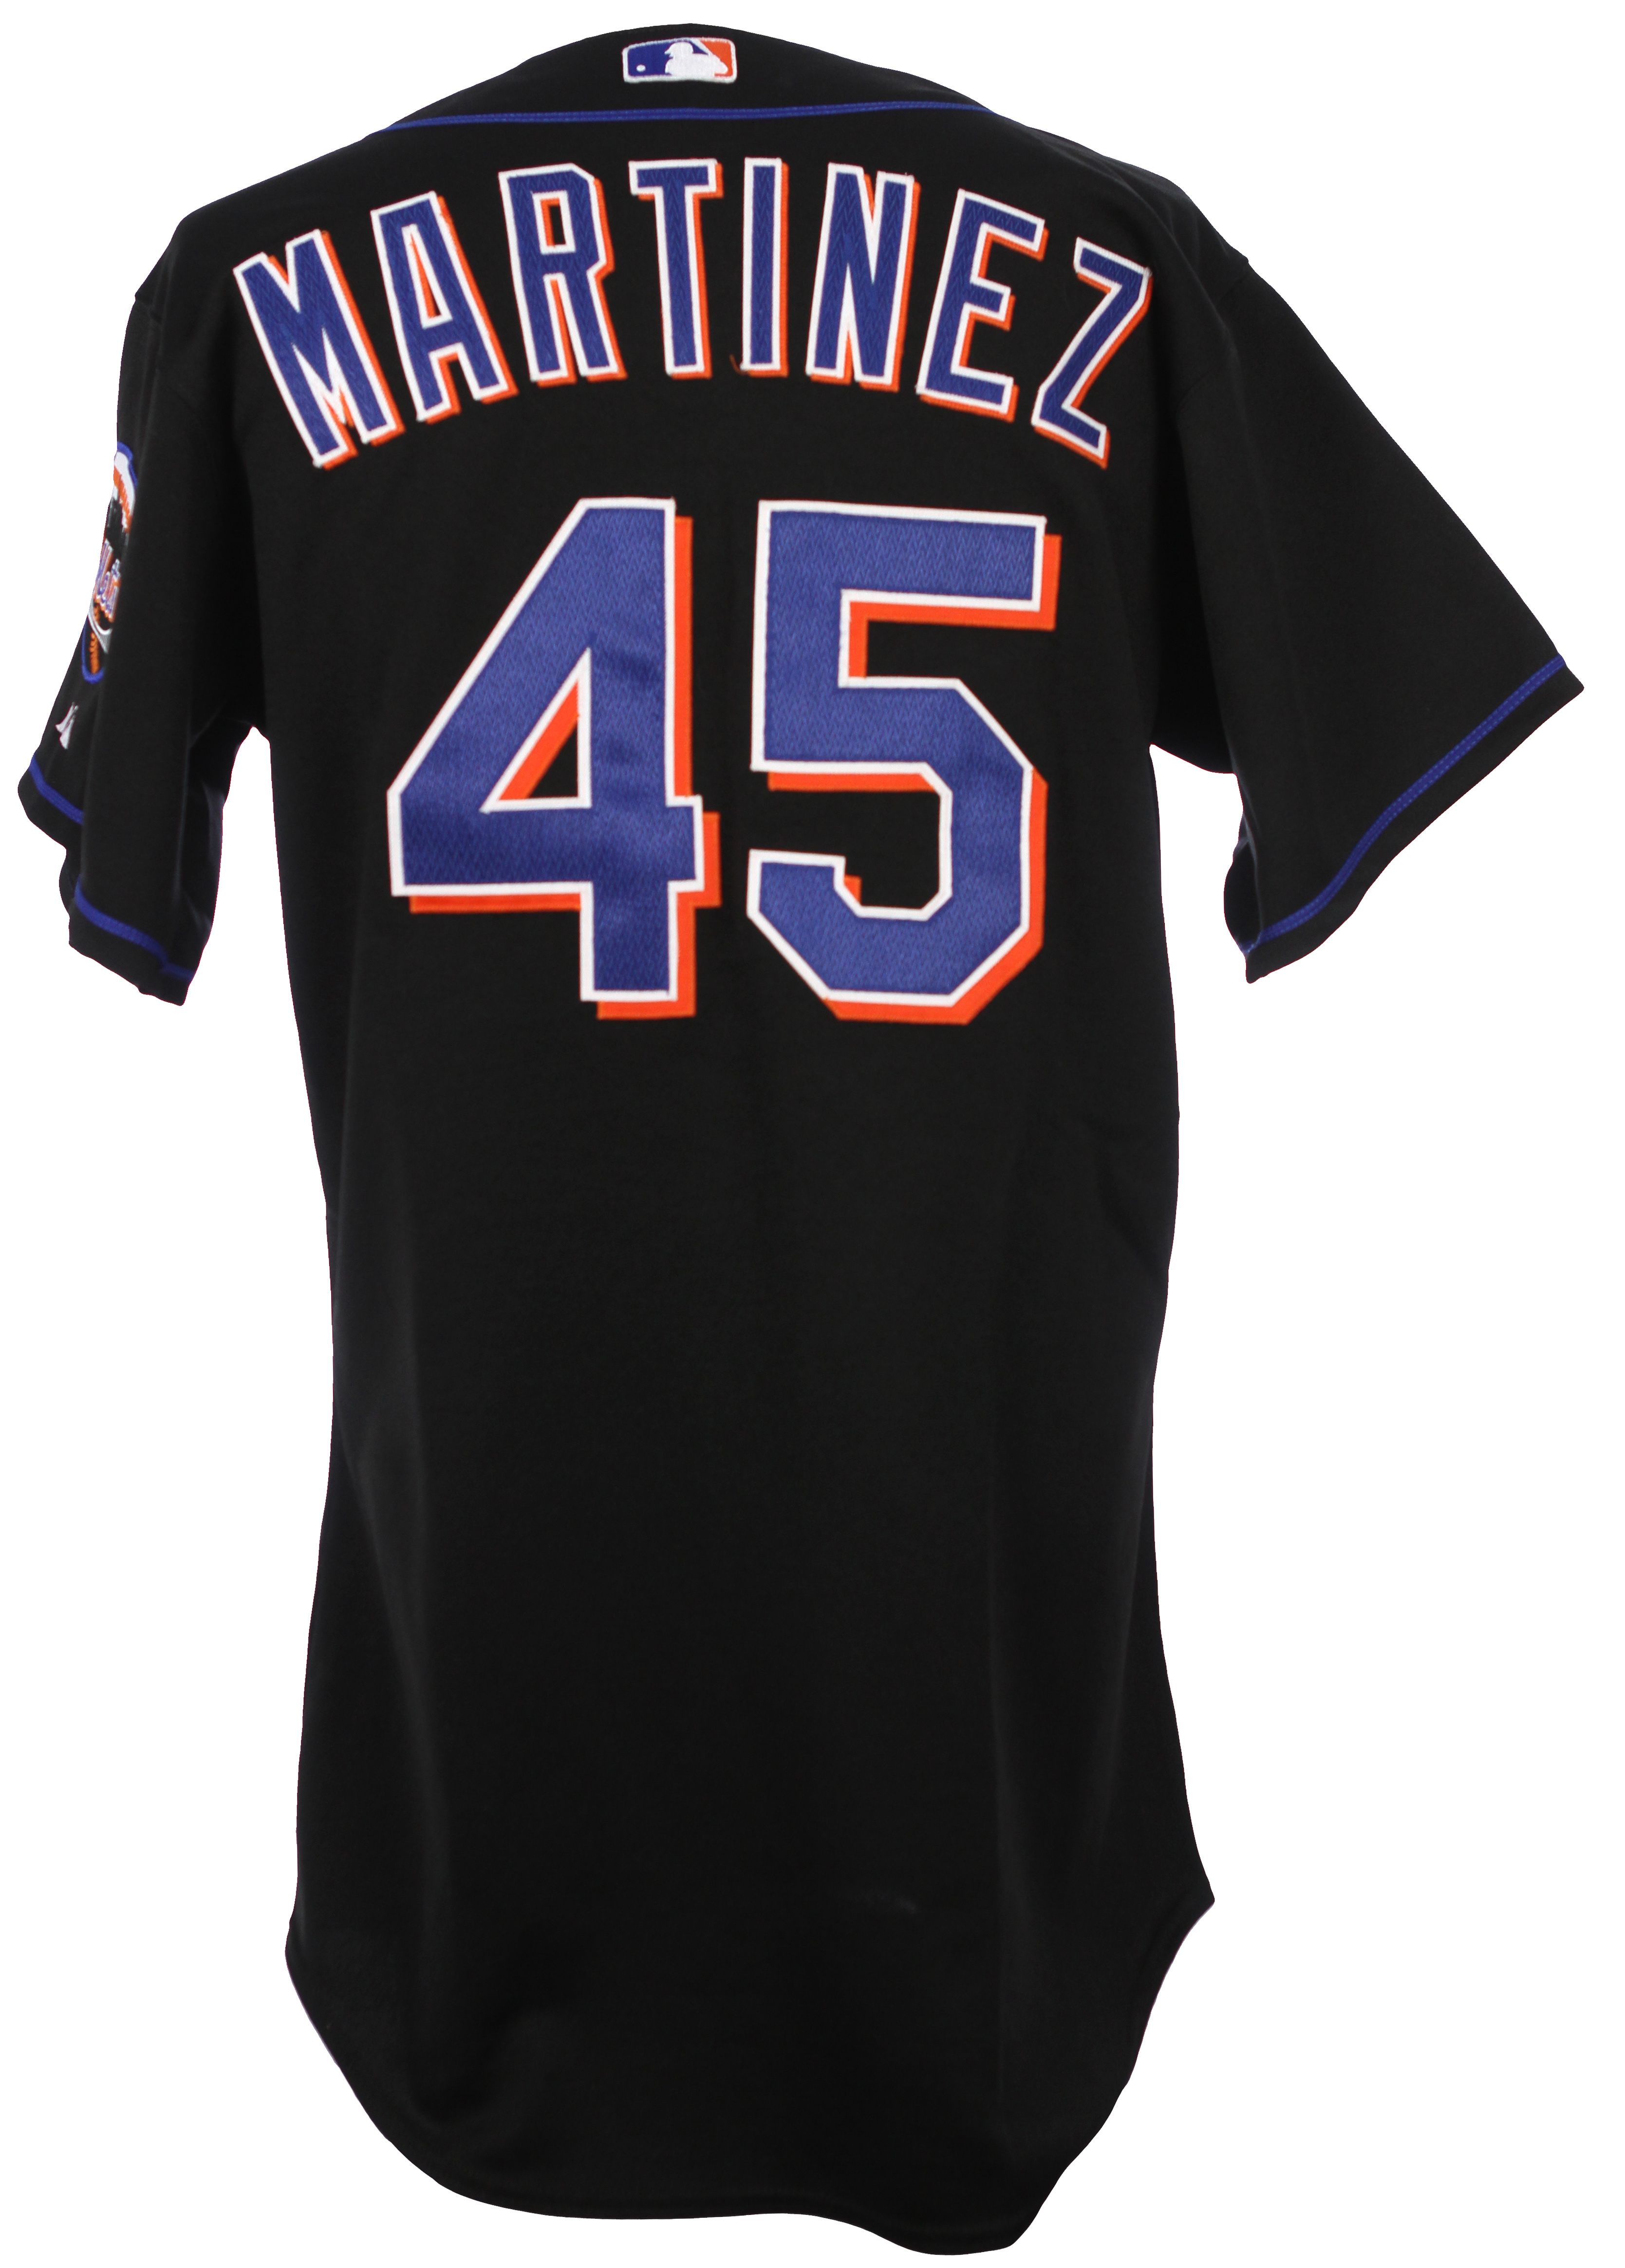 New York Mets jersey worn by Pedro Martinez